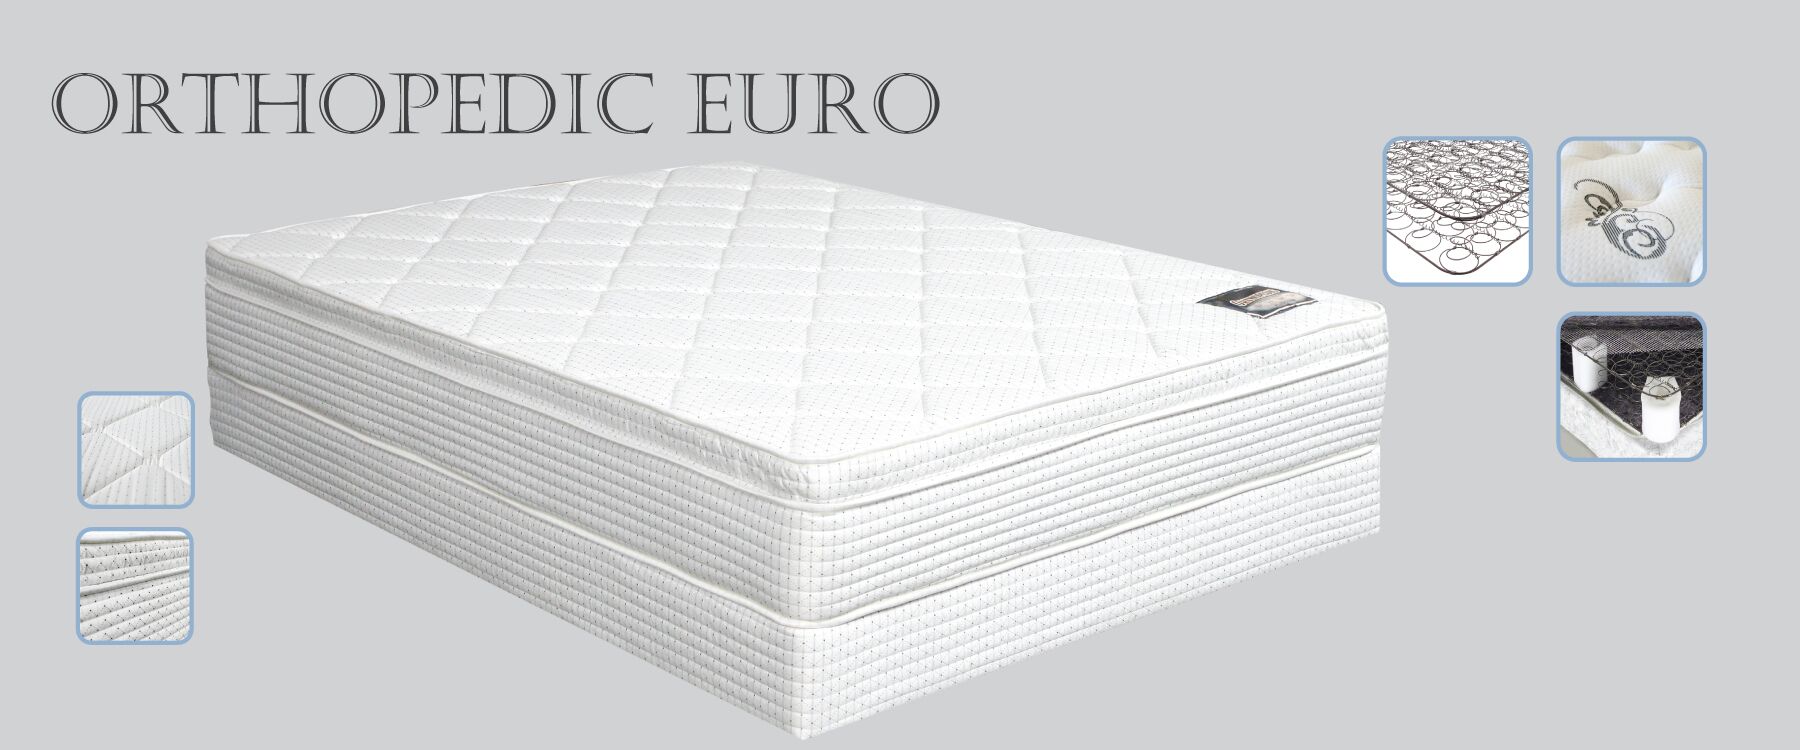 sleep-aid mattress orthopedic collection